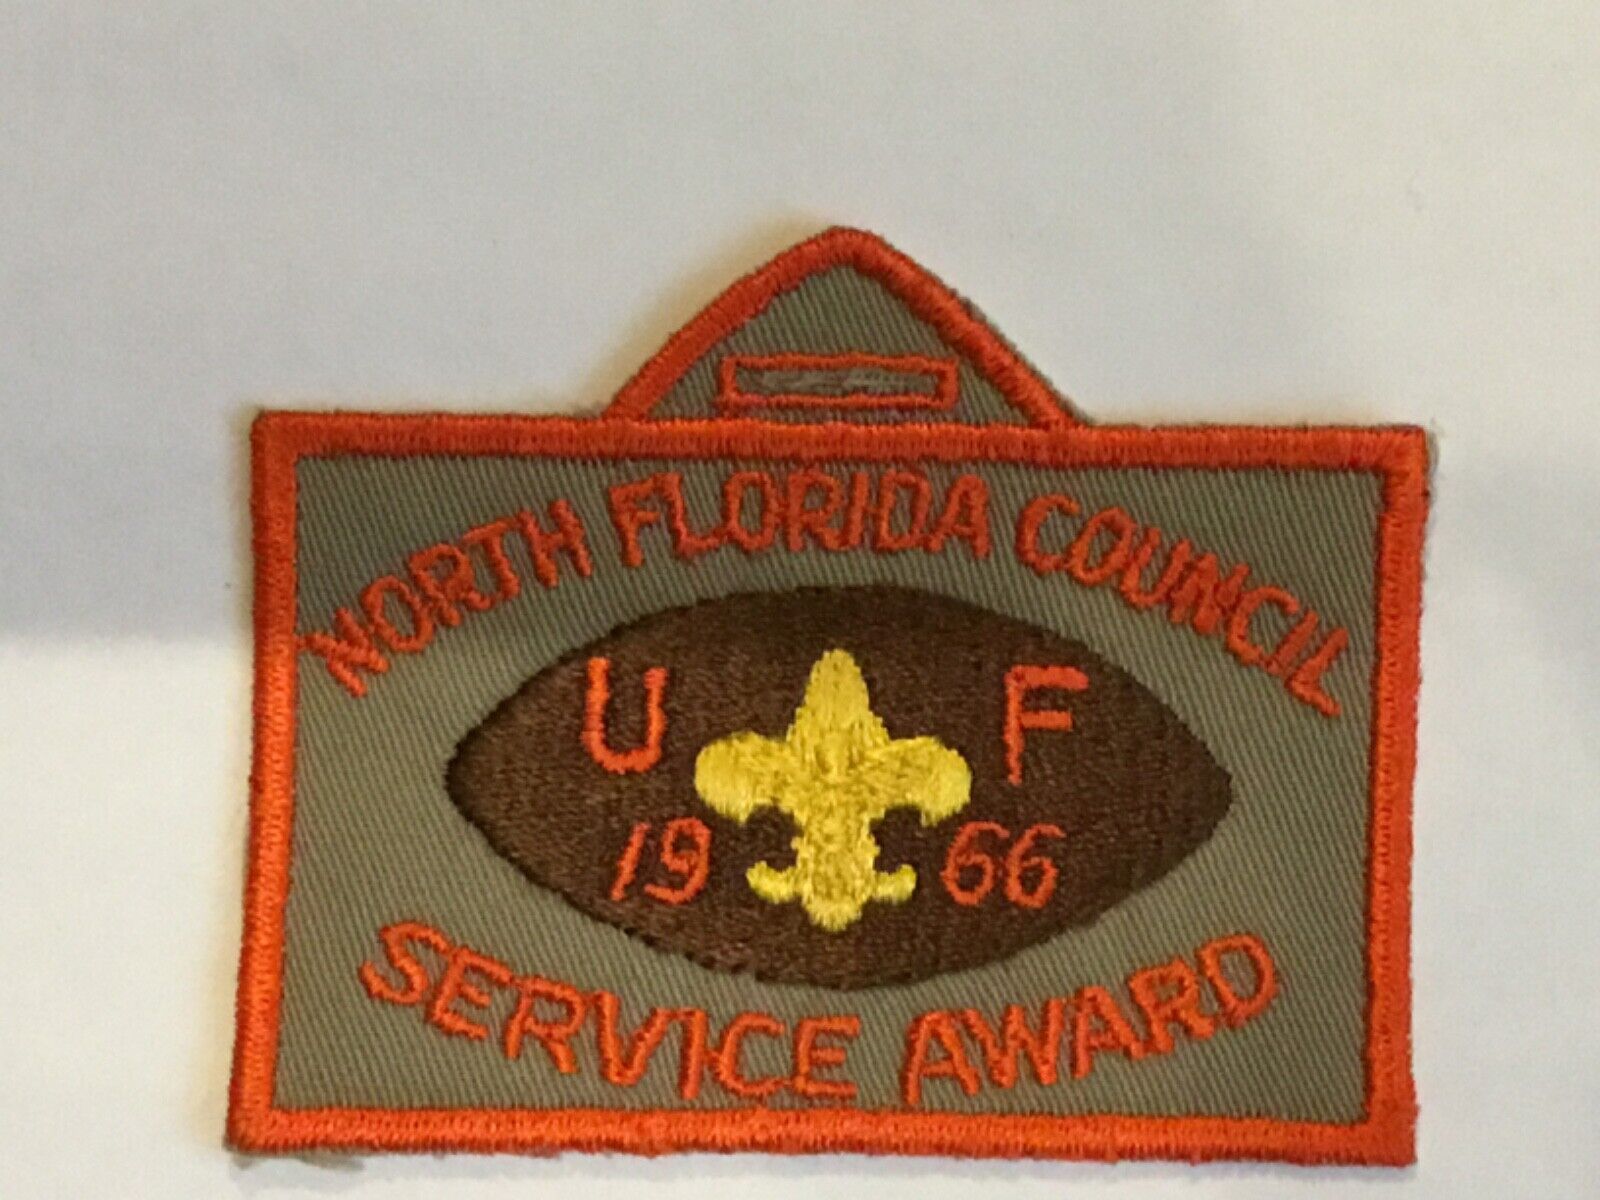 North Florida Council 1966 University of Florida Service Award Patch USHER